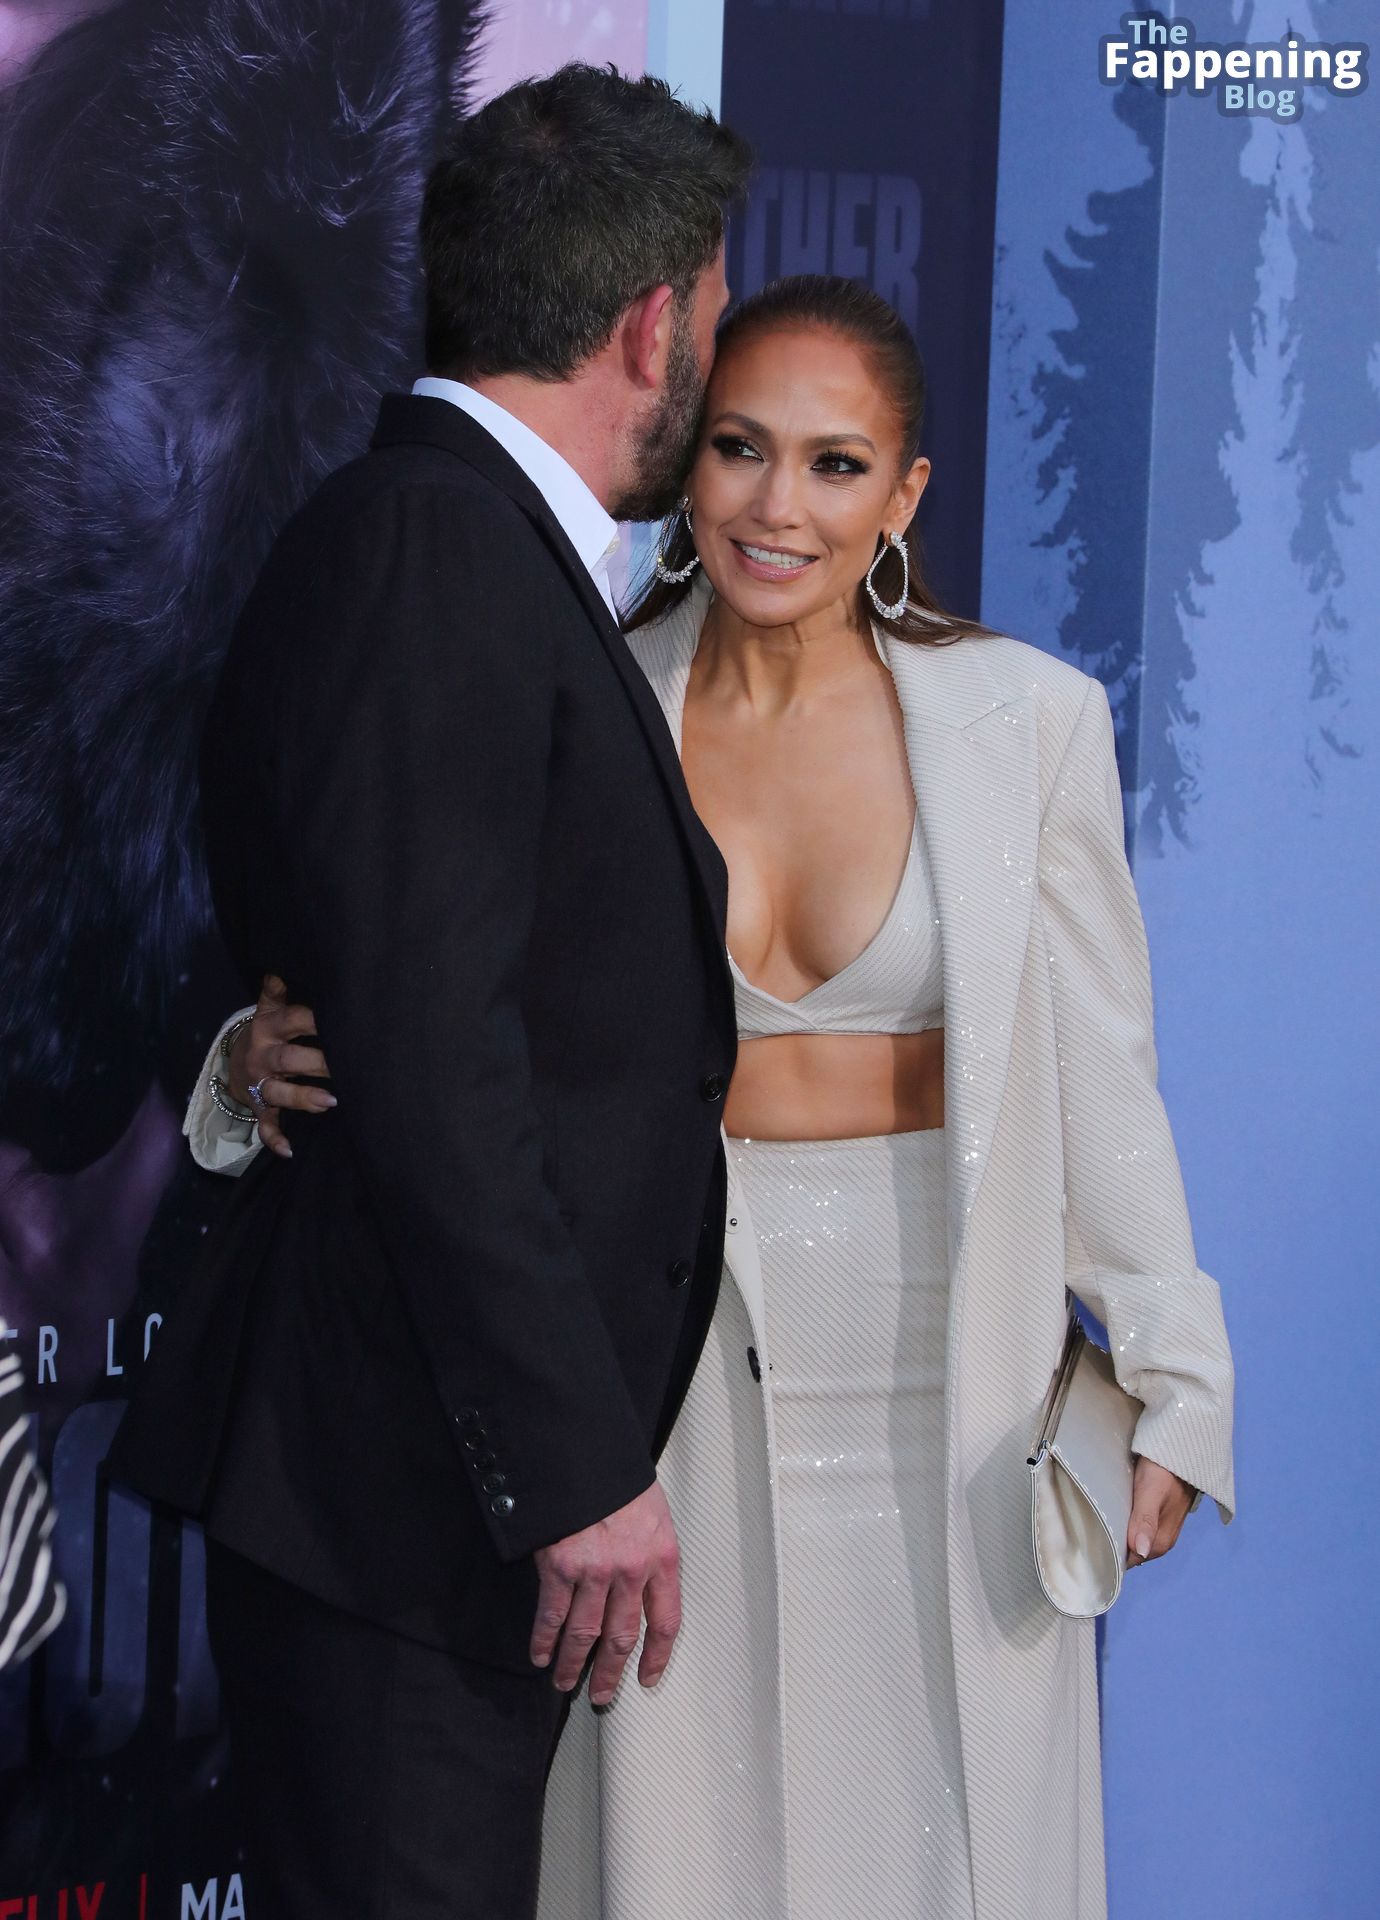 Jennifer-Lopez-Sexy-The-Fappening-Blog-31-1.jpg